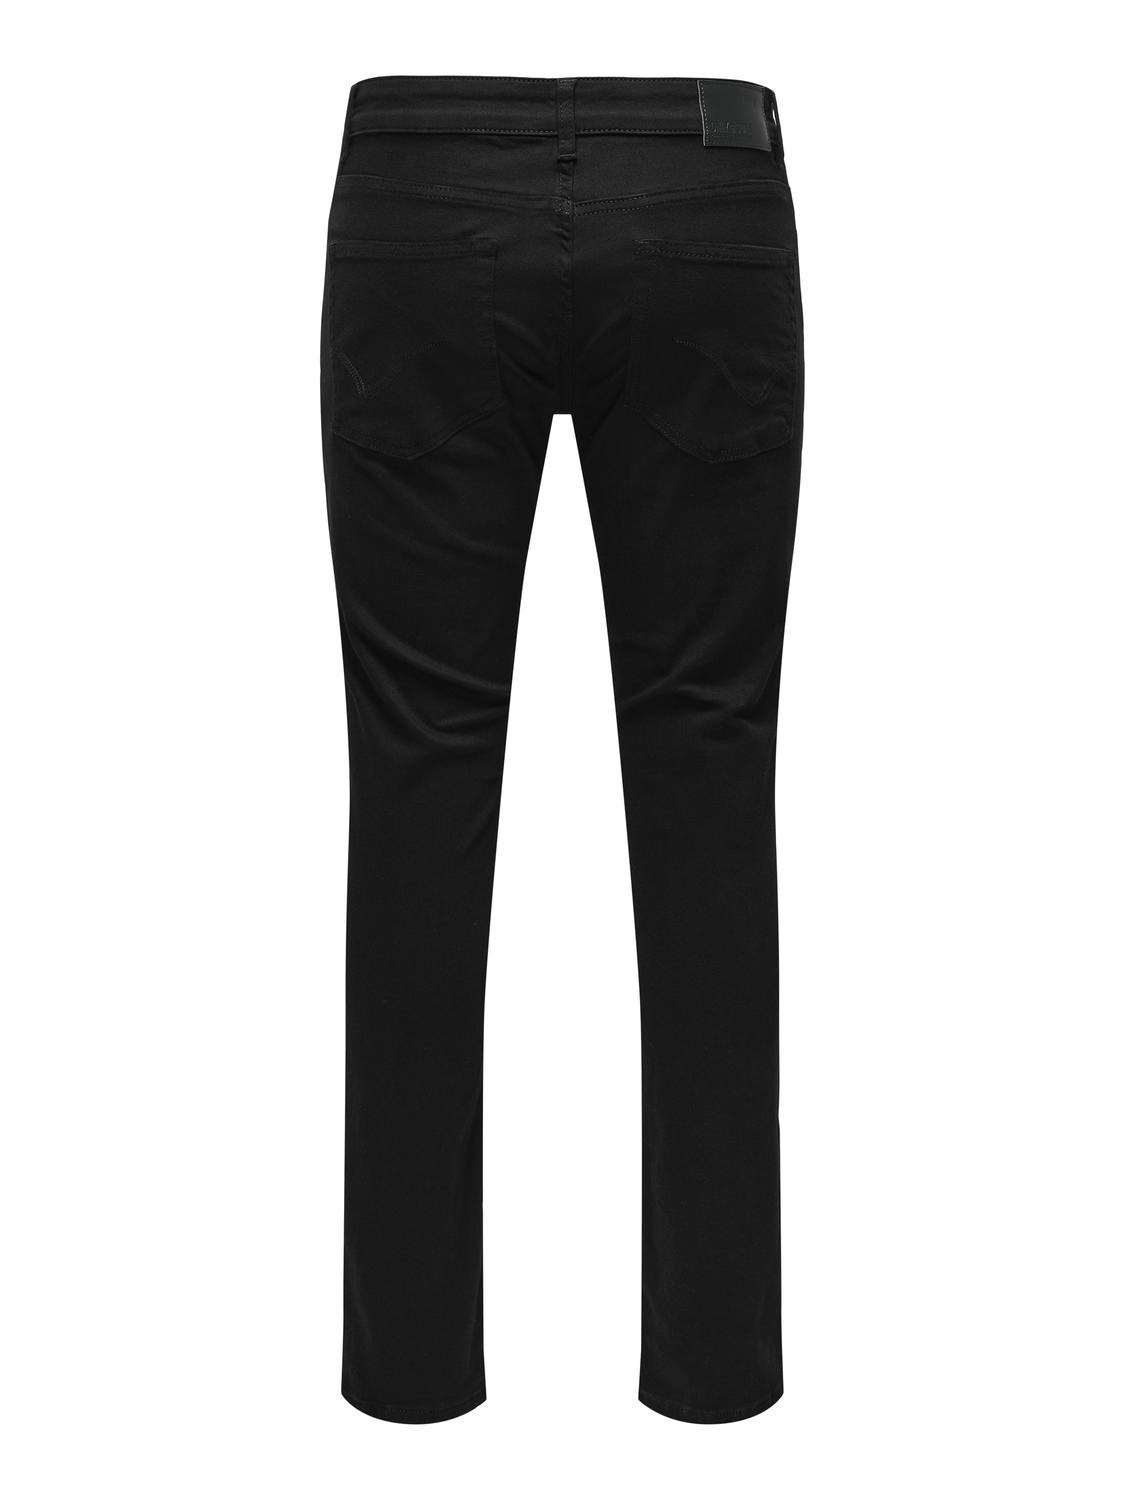 ONLY & SONS Jeans Slim Fit Taille basse -Black Denim - 22029242